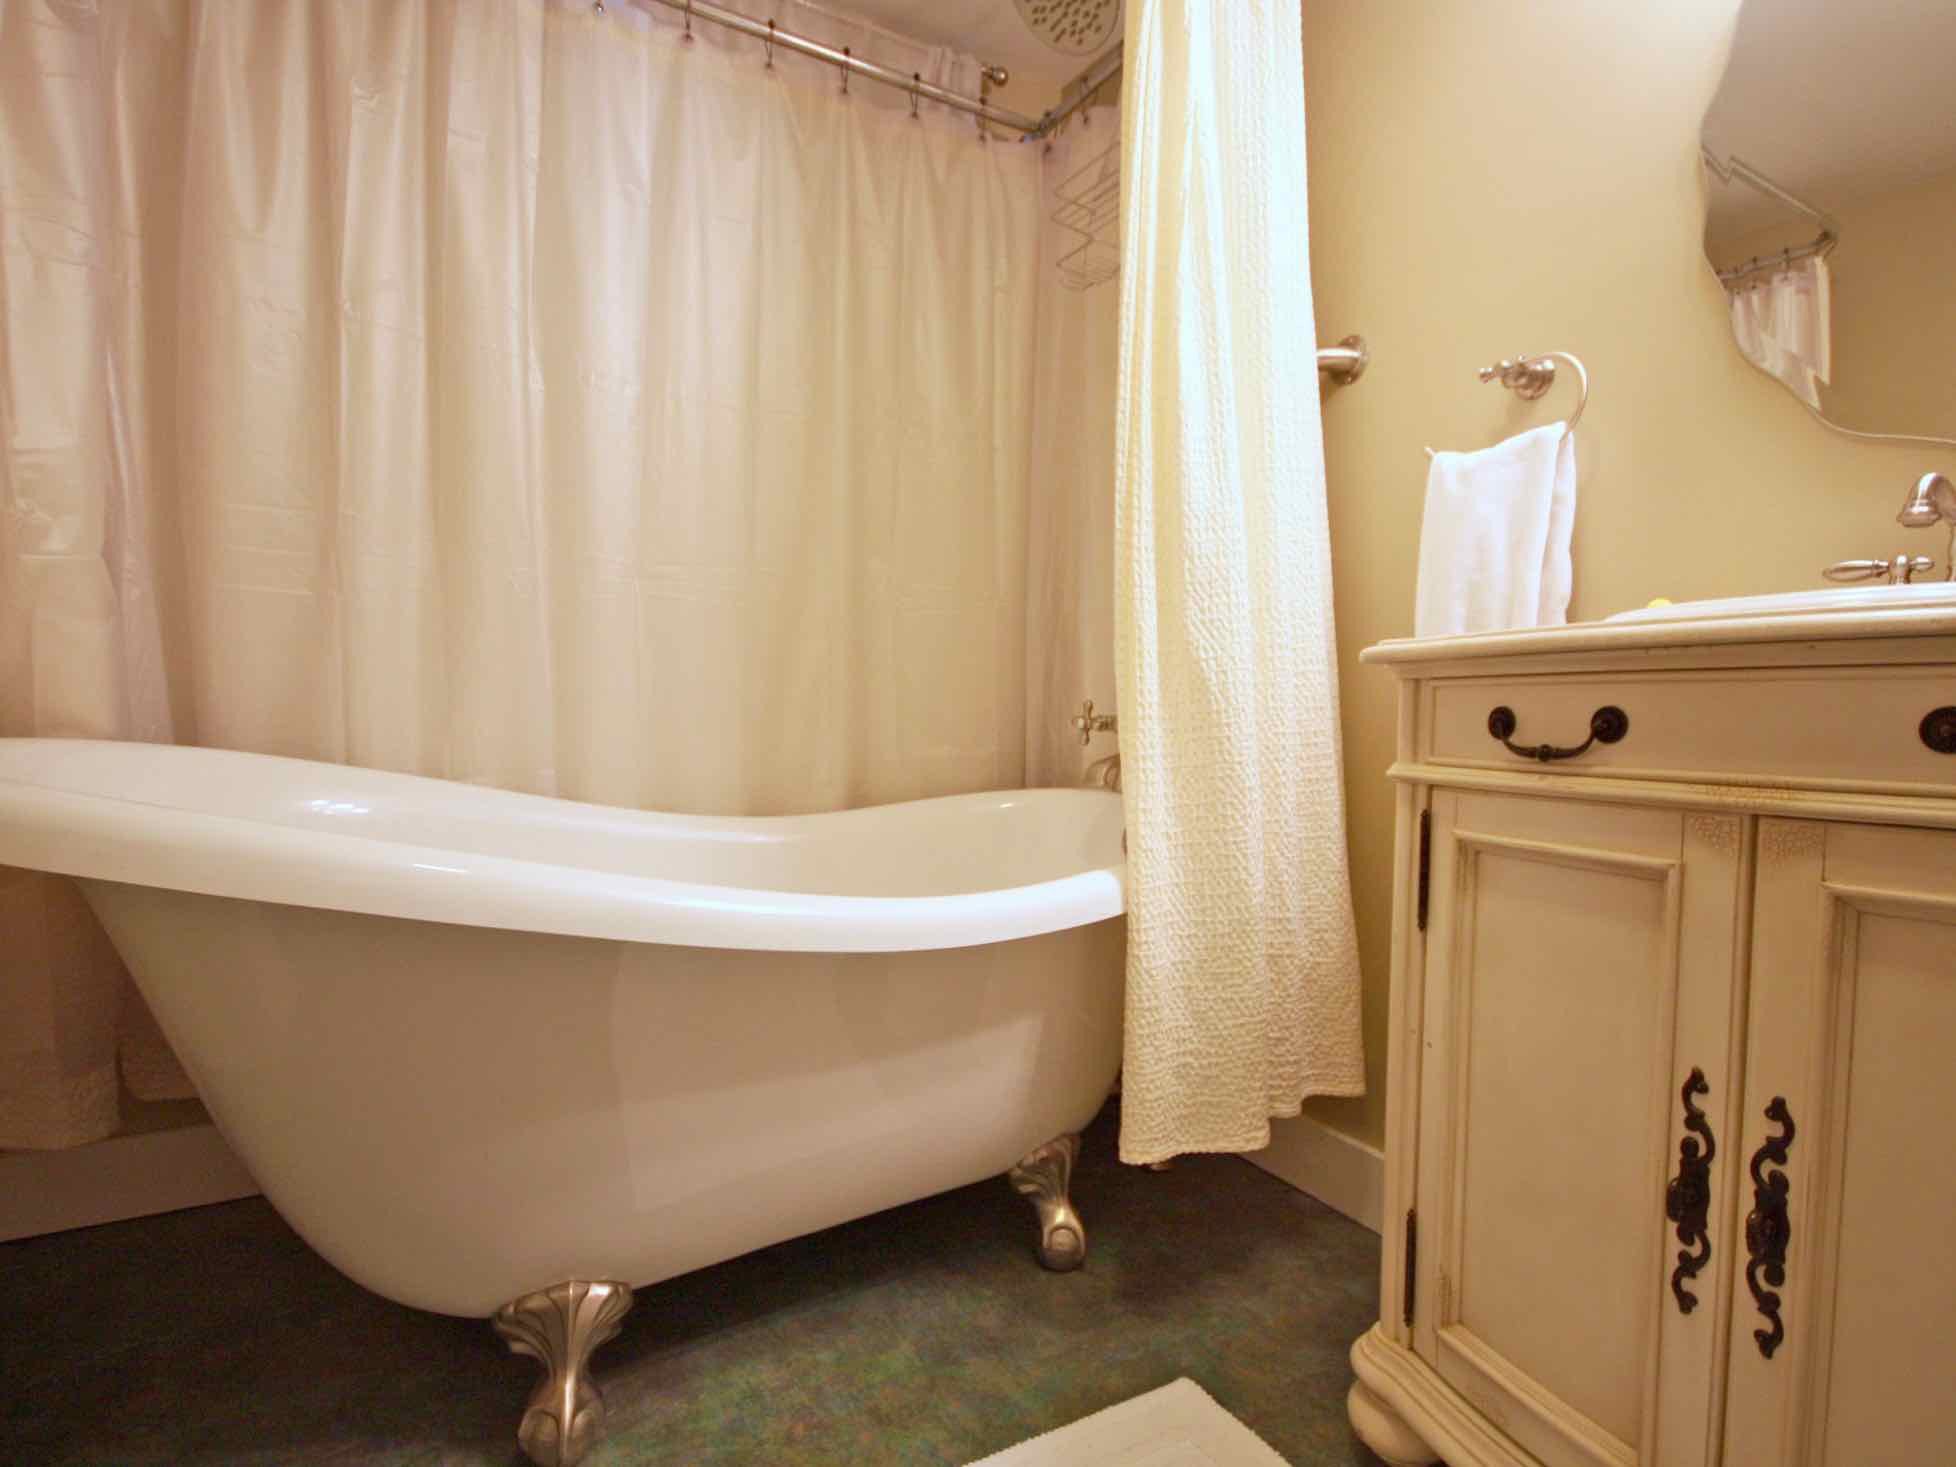 Acadia Suite - Claw-foot bathtub and bathroom at Coach Stop Inn